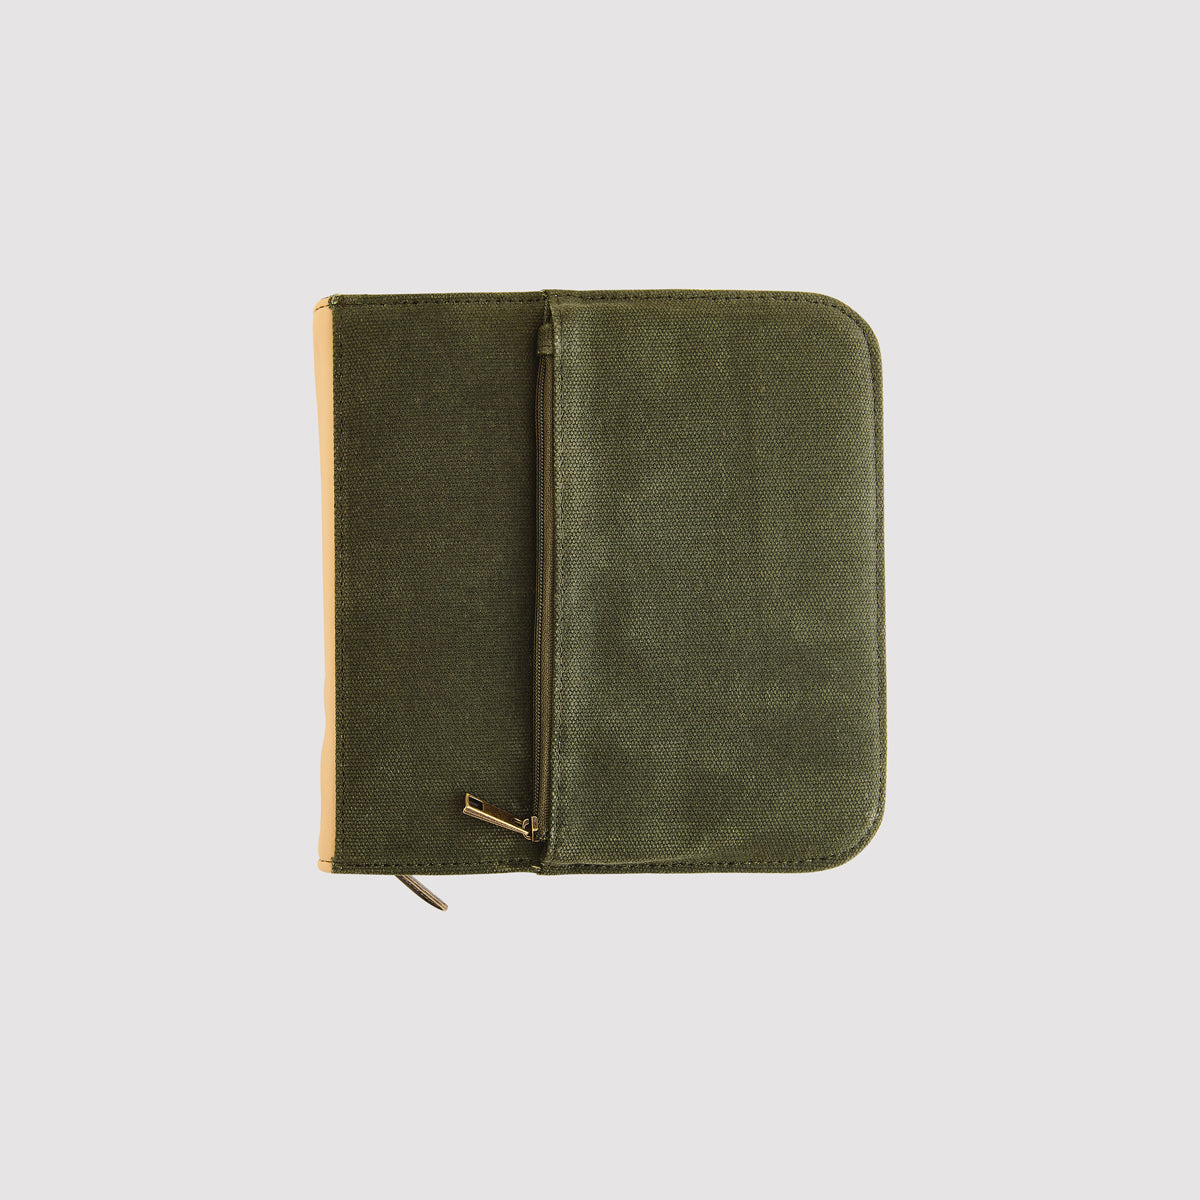 Esterbrook 20 pc zipper pen case - Army Green